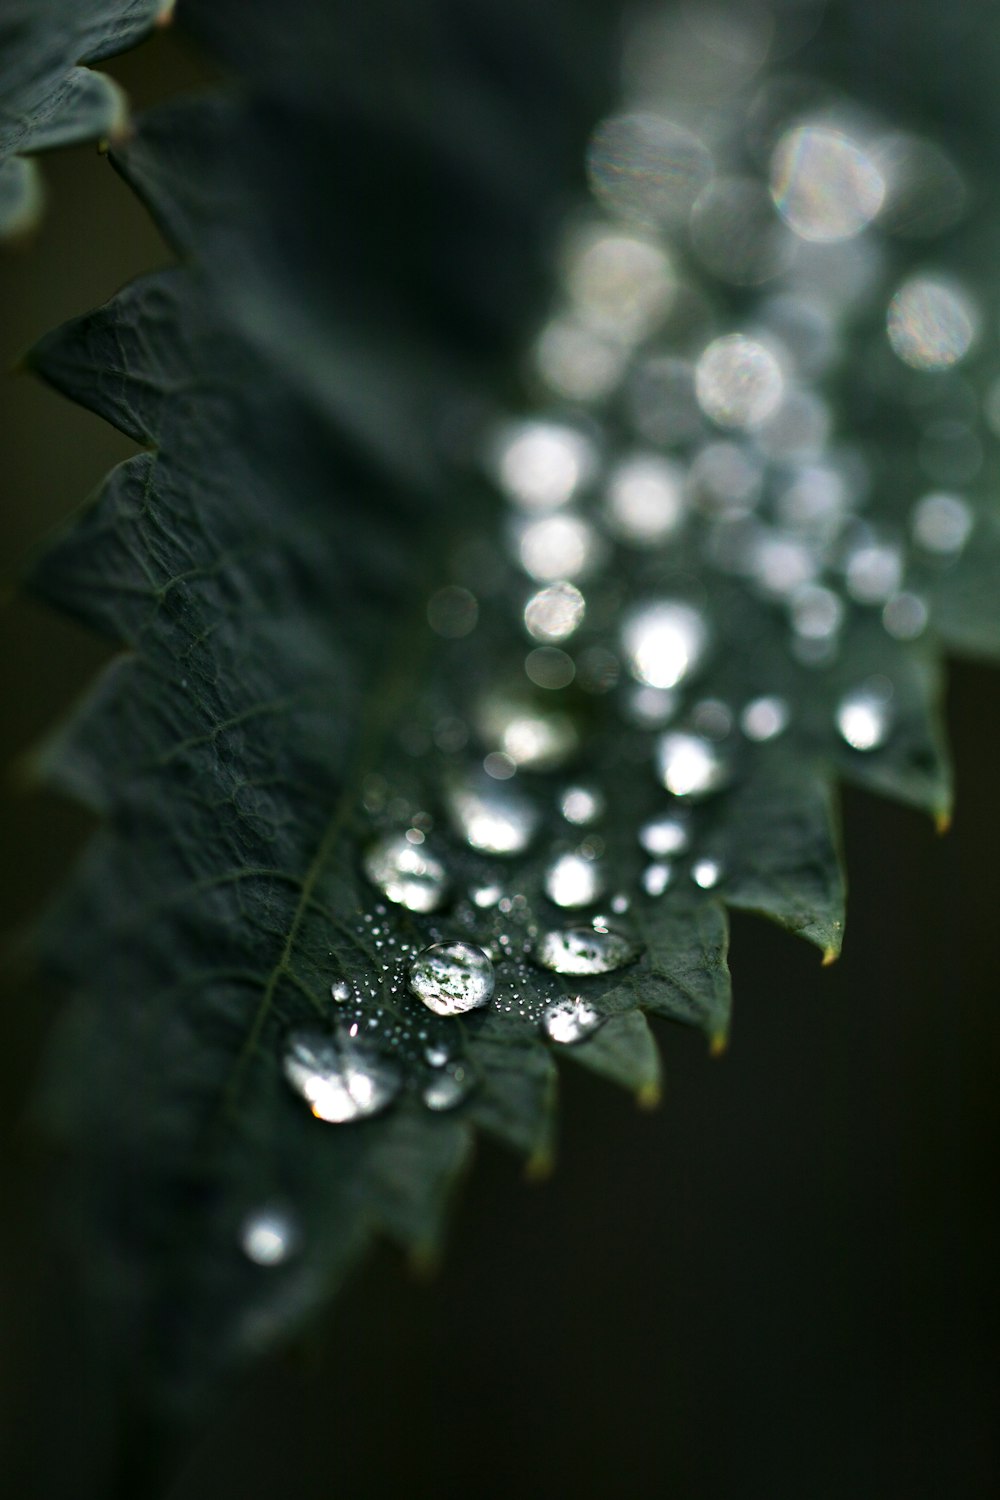 leaf with morning dew